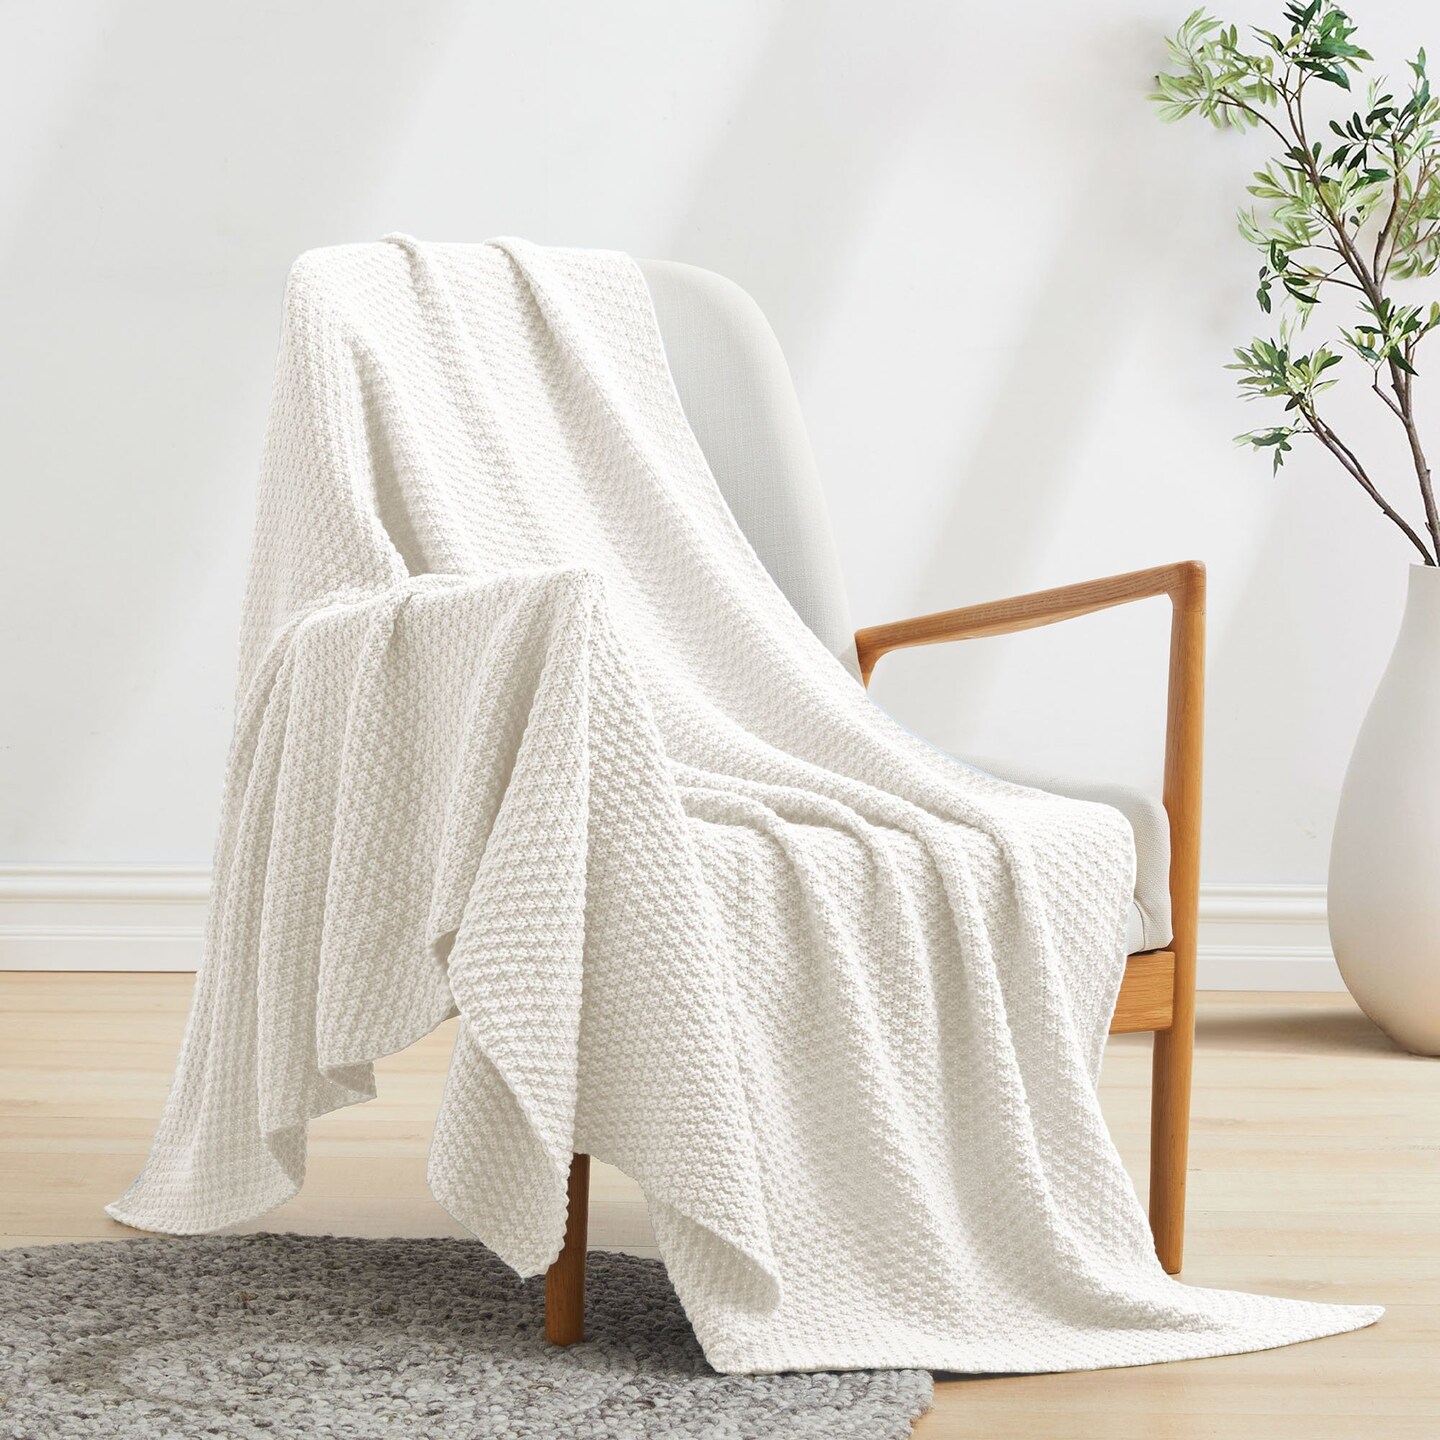 Peace Nest Super Soft Throw Blanket Lightweight Bed Blanket All Season Use